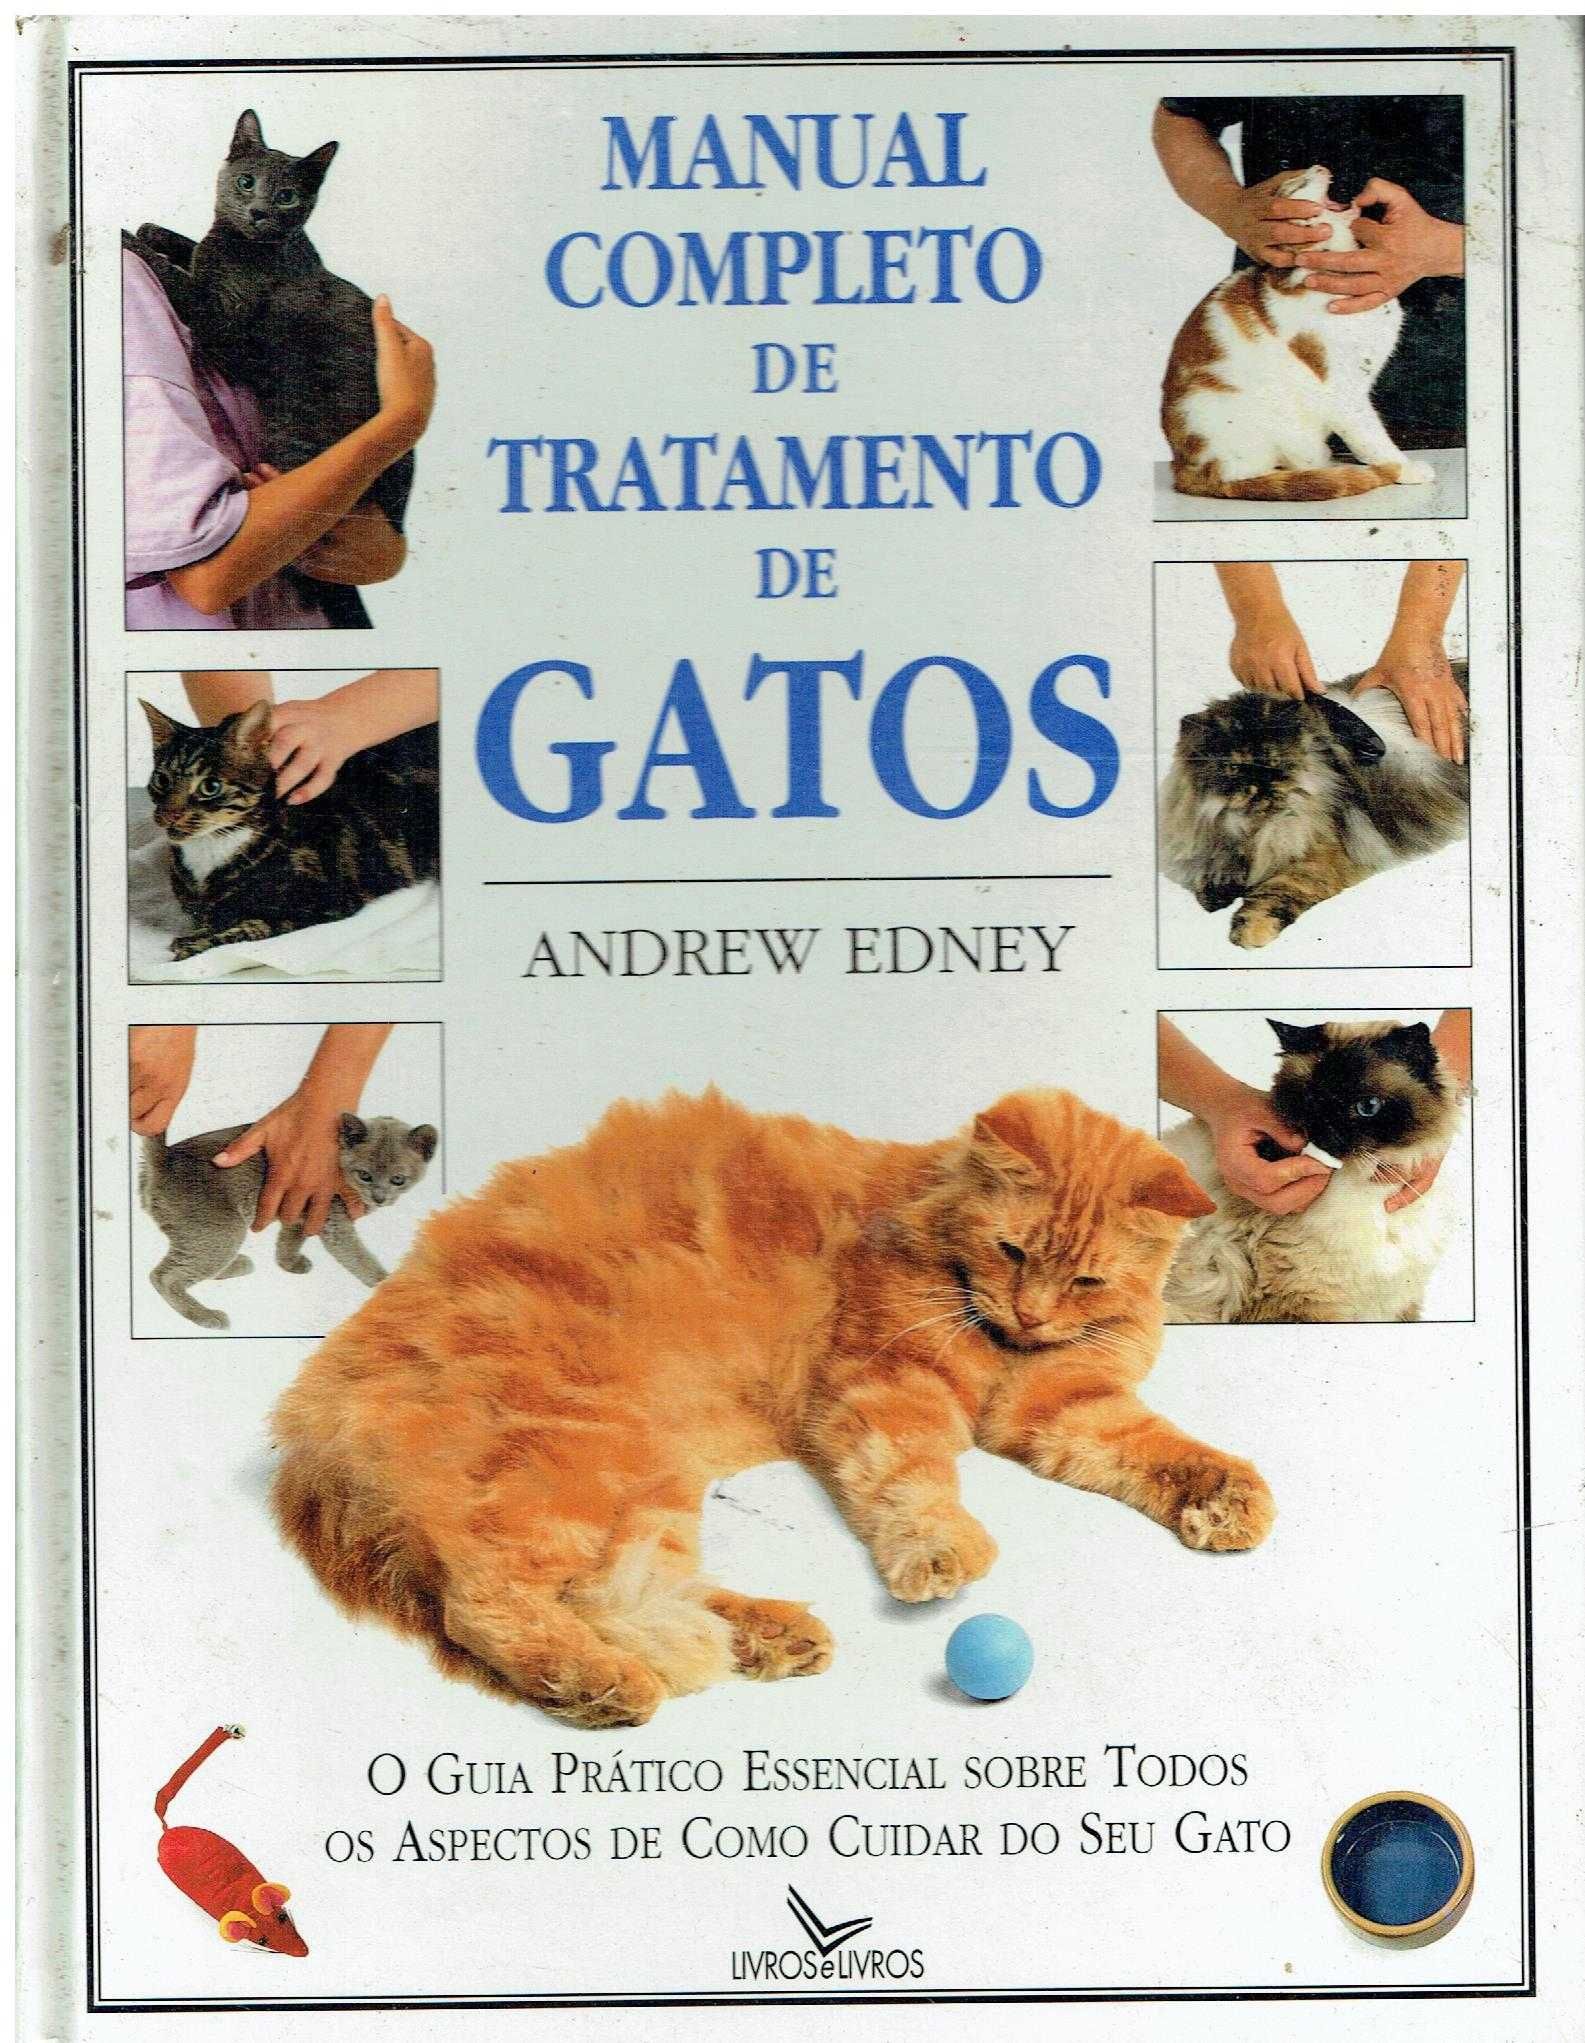 9519

Manual Completo de Tratamento de Gatos